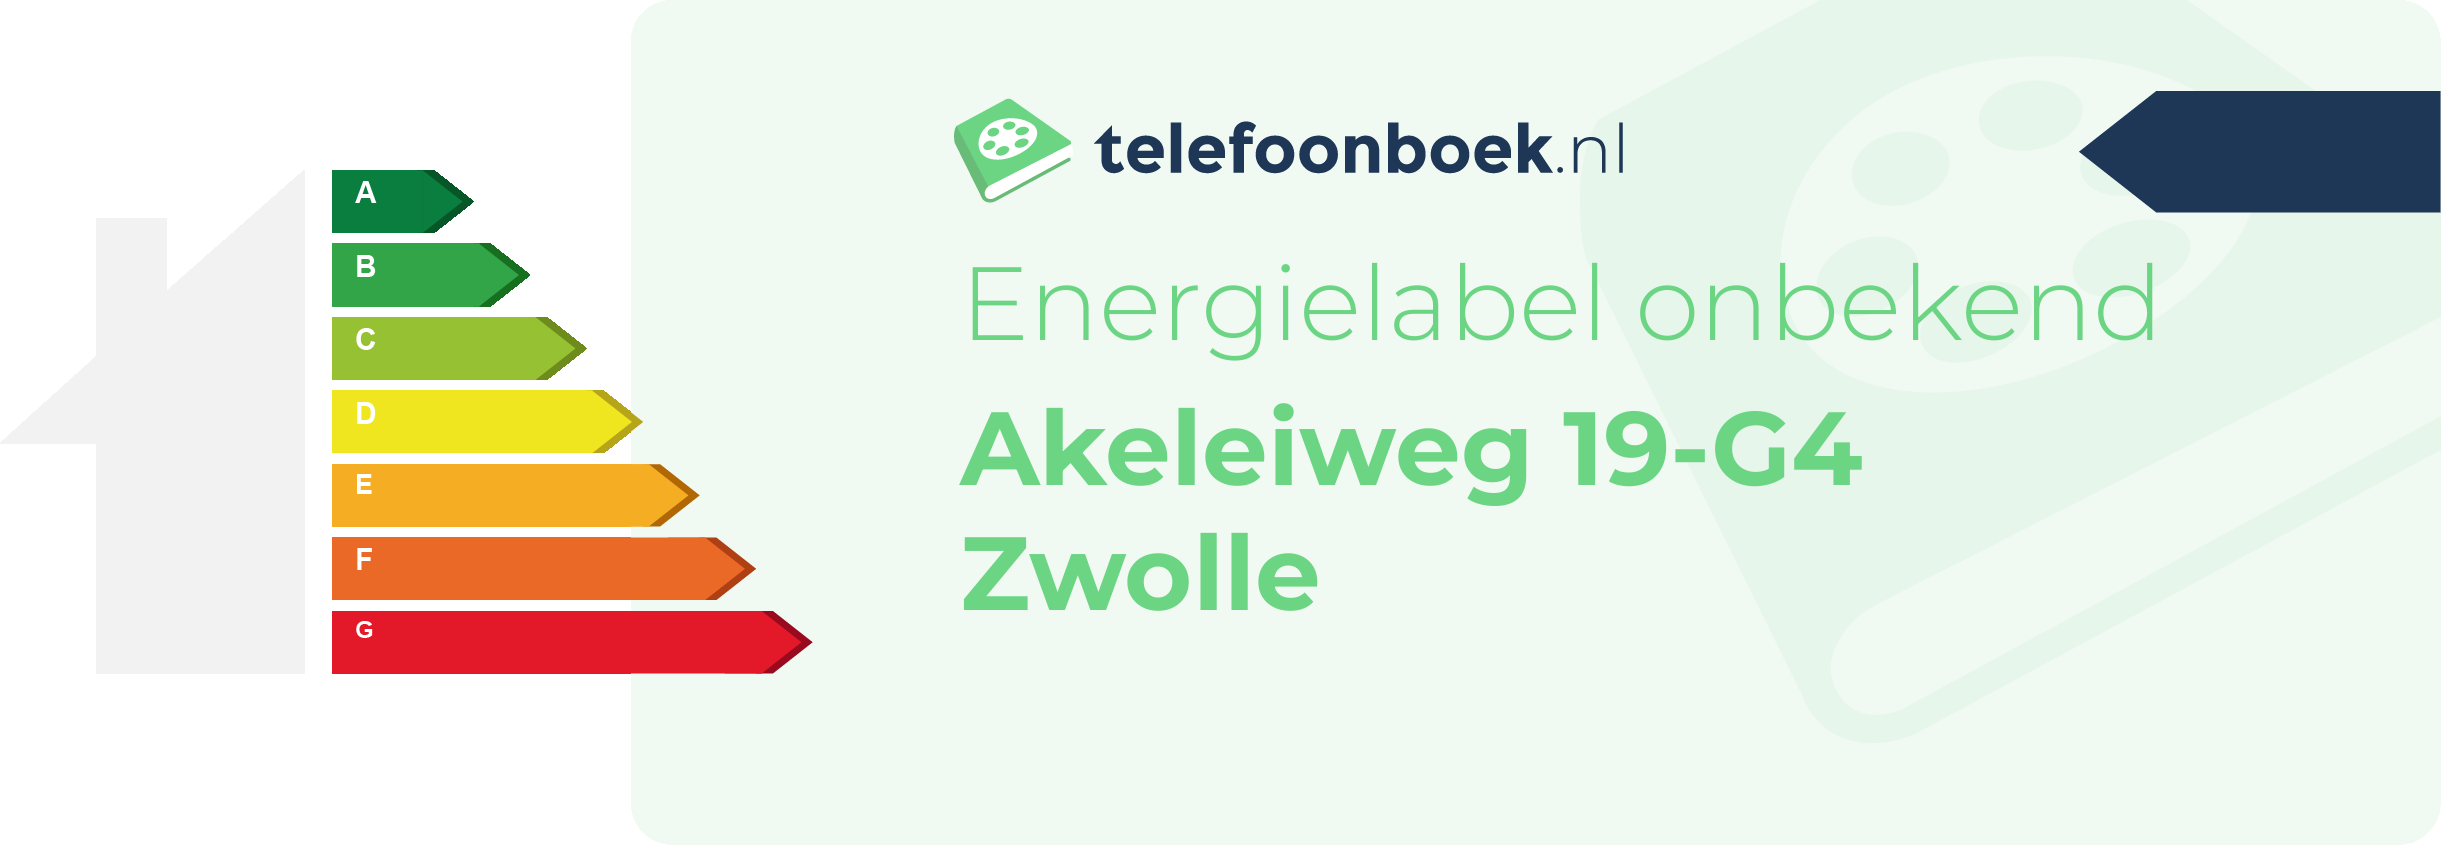 Energielabel Akeleiweg 19-G4 Zwolle